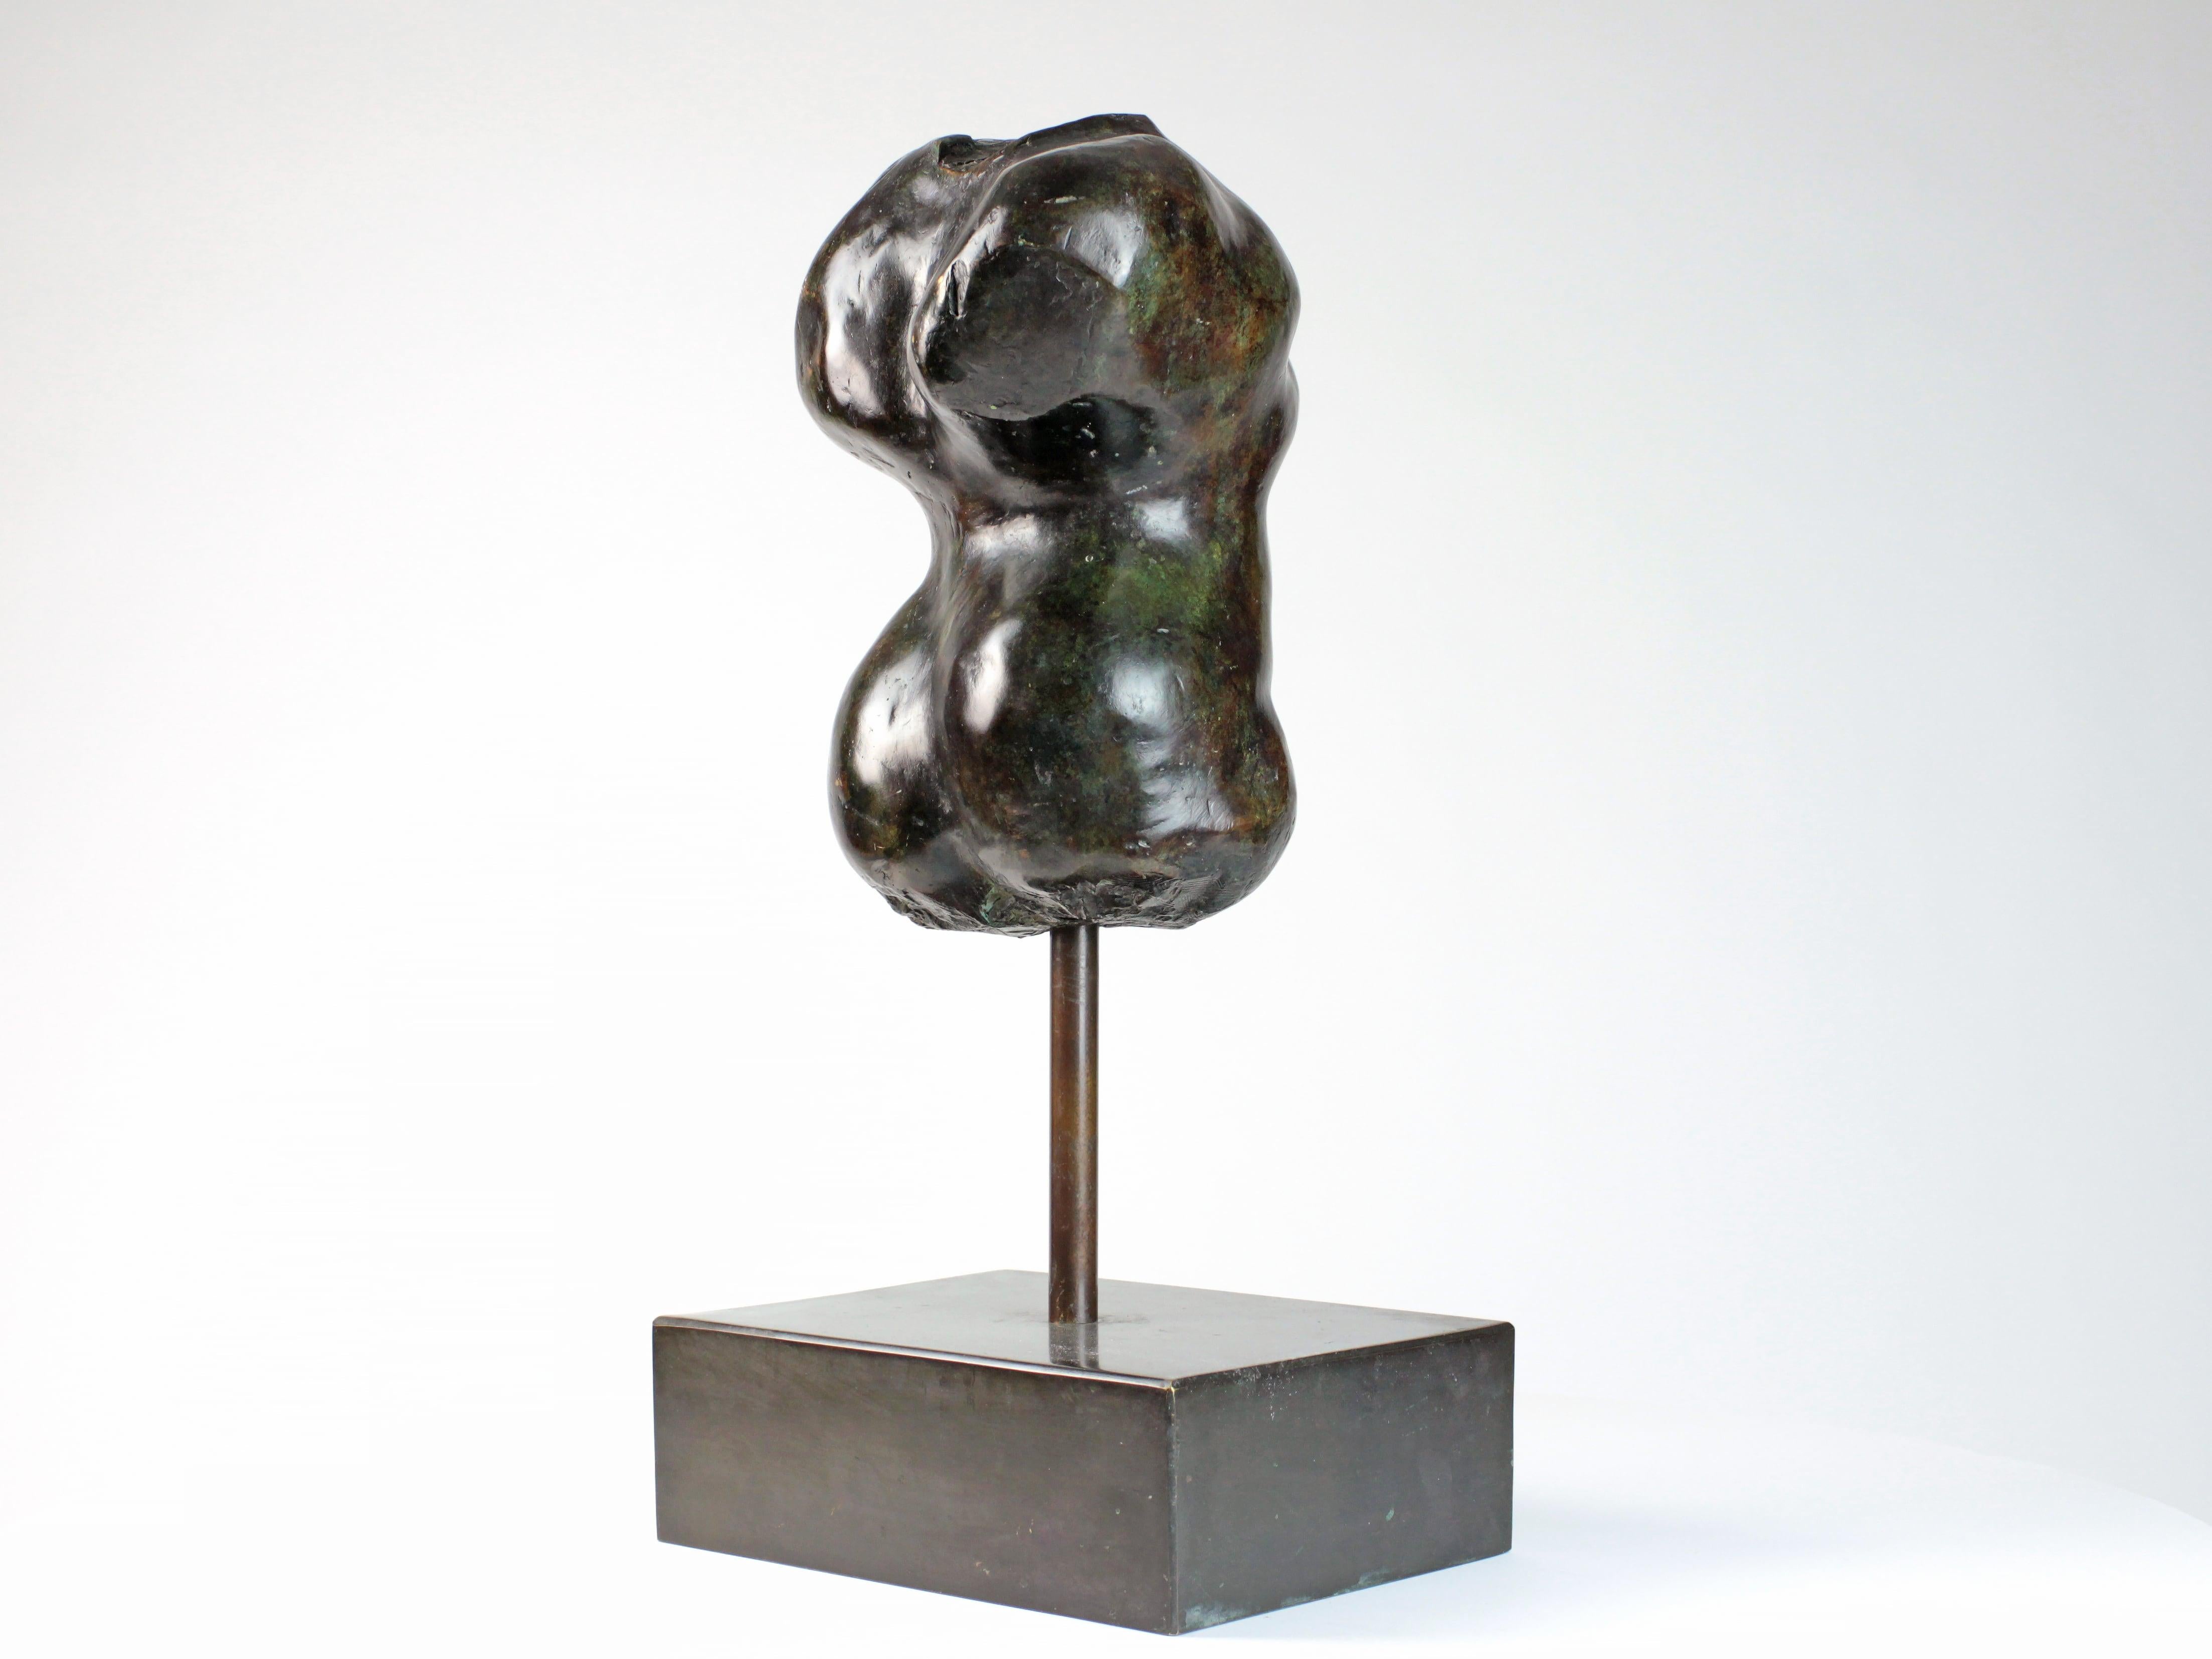 Hermaphrodite I is a bronze sculpture by contemporary artist Yann Guillon, dimensions are 31 cm × 25 cm × 20 cm (12.2 × 9.8 × 7.9 in). Dimensions of the metal base: 10 cm x 31 cm x 24 cm (3.9 x 12.2 x 9.4 in). Height of the sculpture with the metal